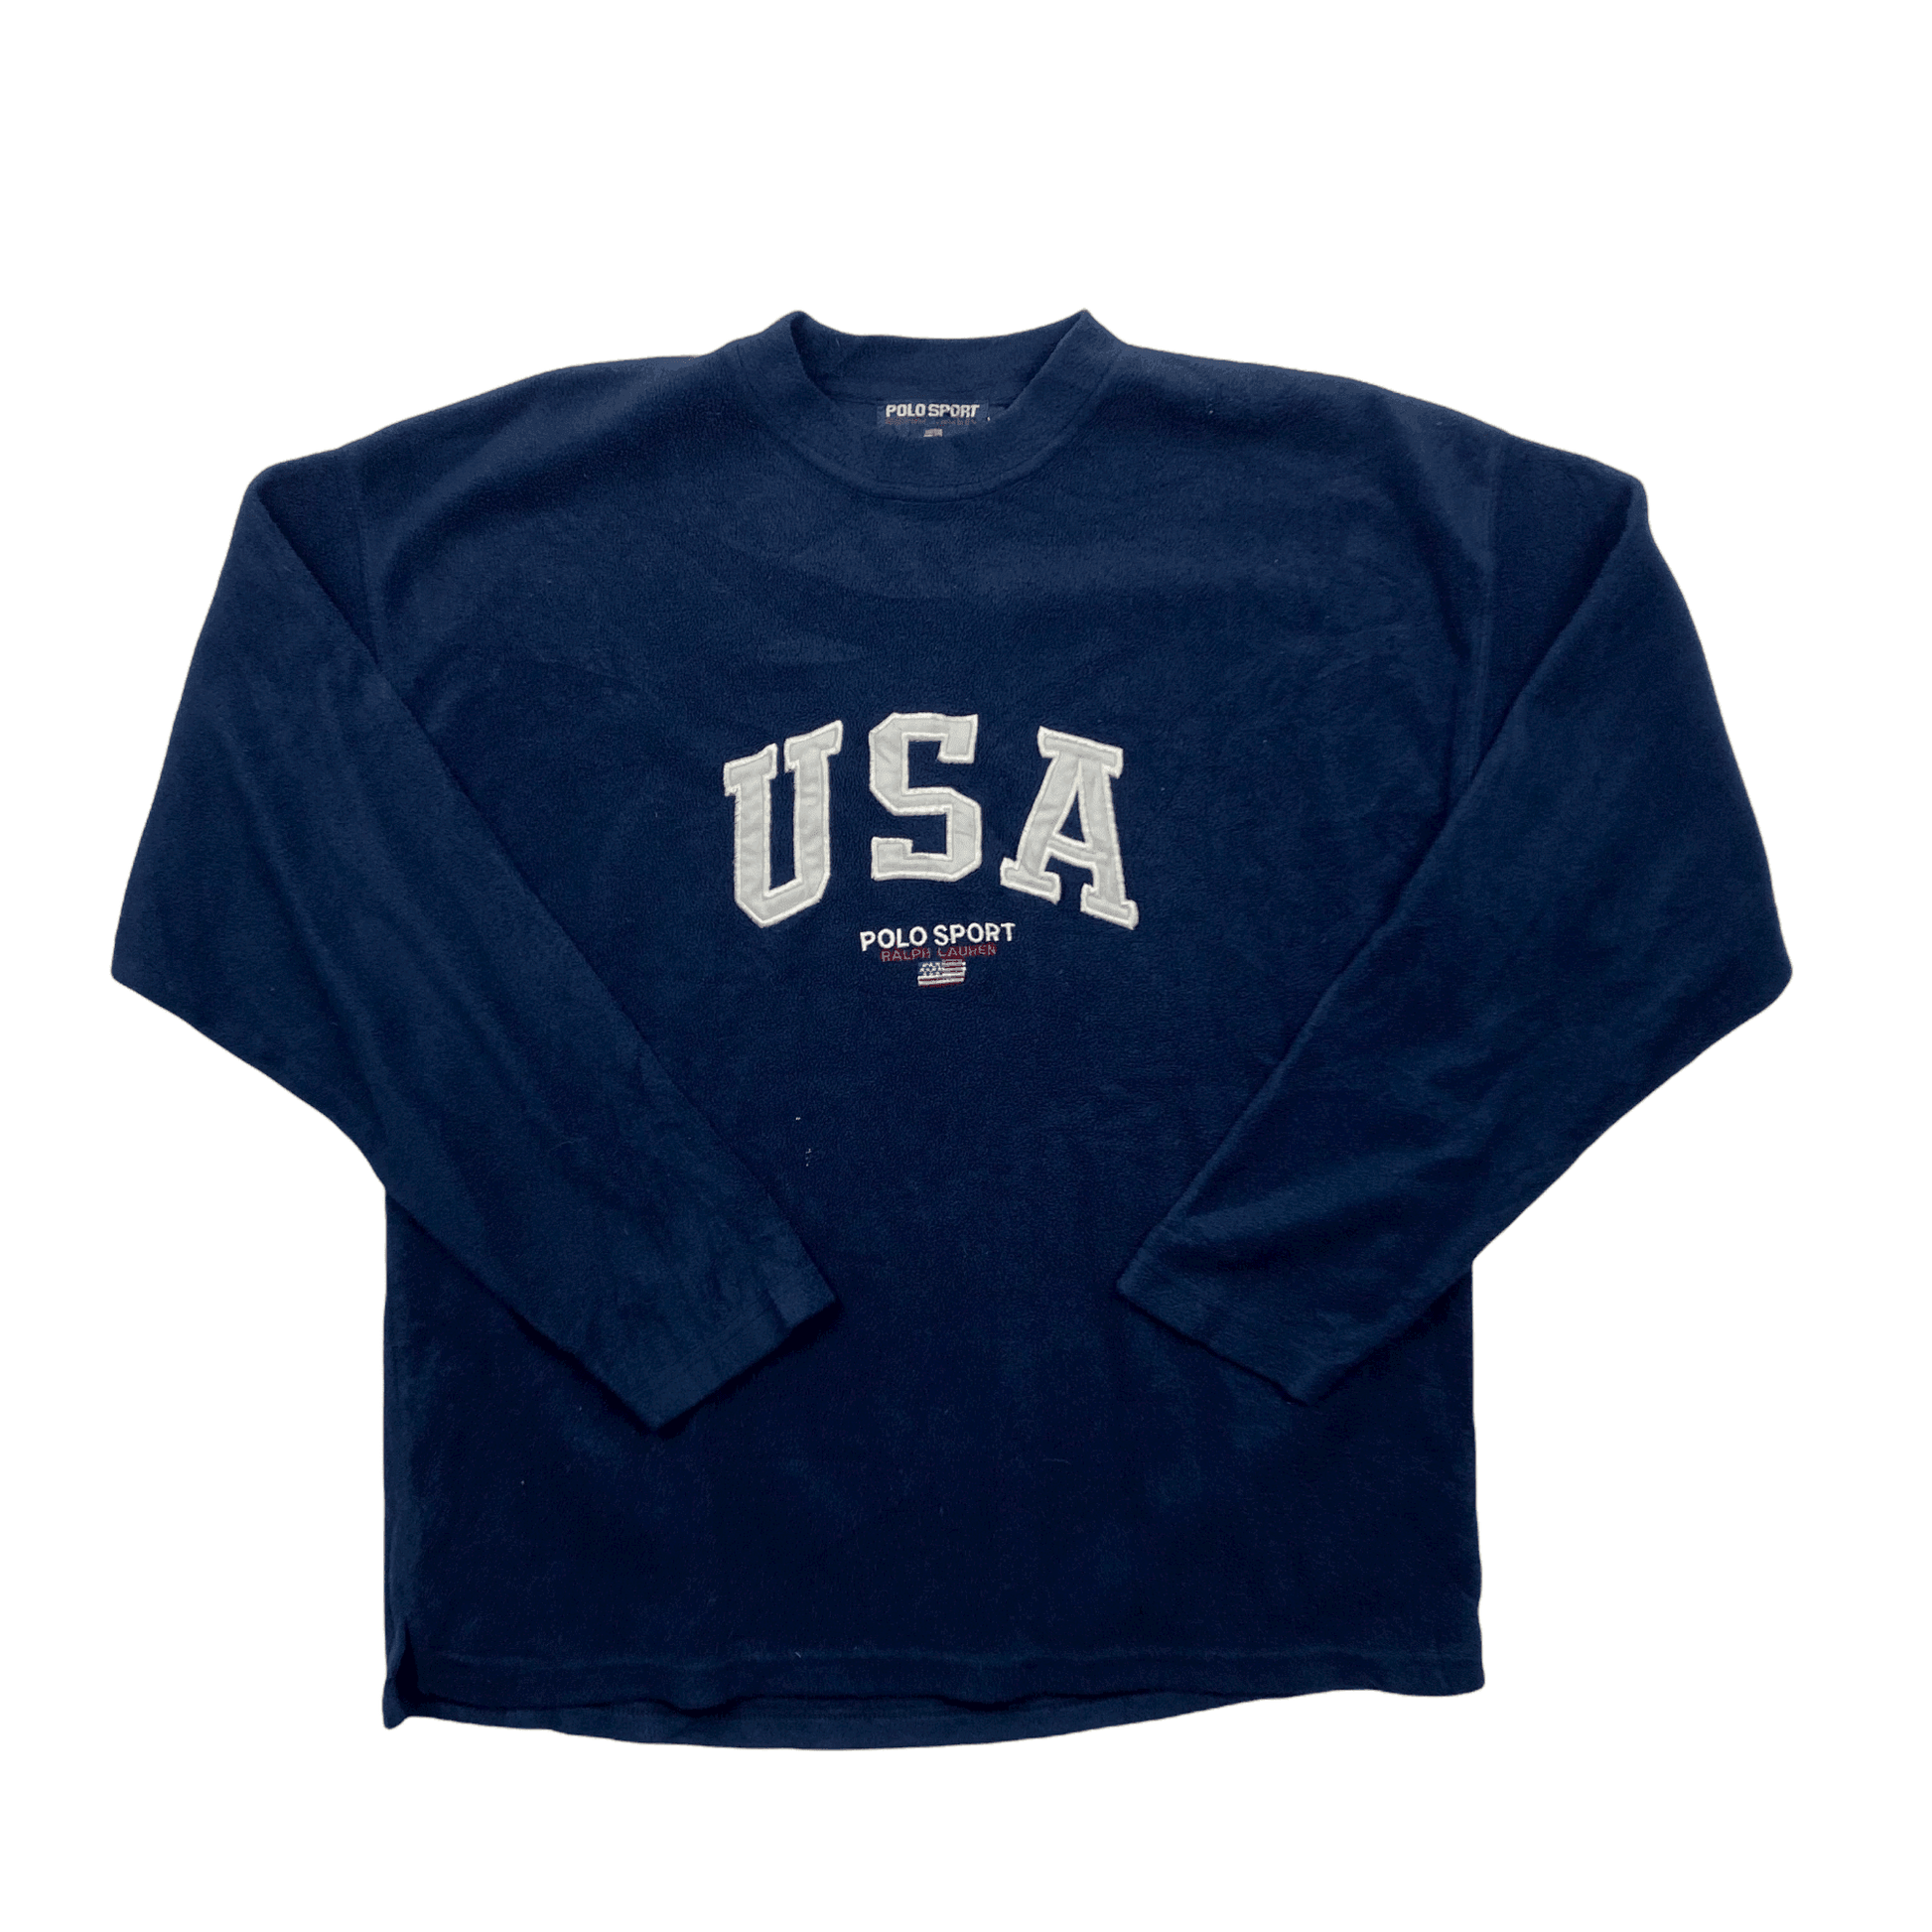 Vintage 90s Navy Blue Ralph Lauren Polo Sport USA Spell-Out Fleece Sweatshirt - Extra Large - The Streetwear Studio